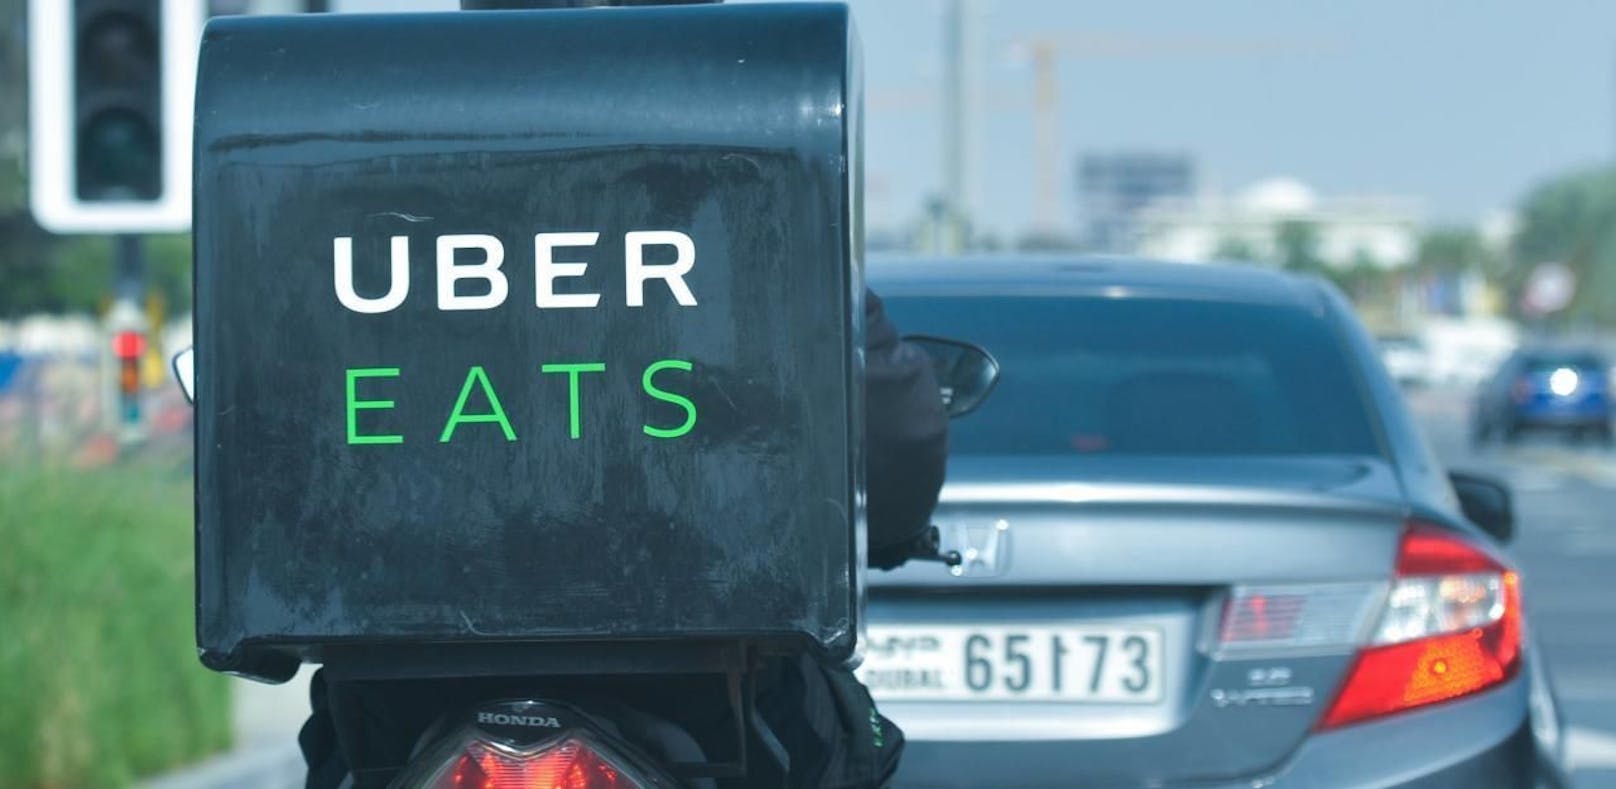 Uber Eats Fahrer auf der Flucht - Mordverdacht